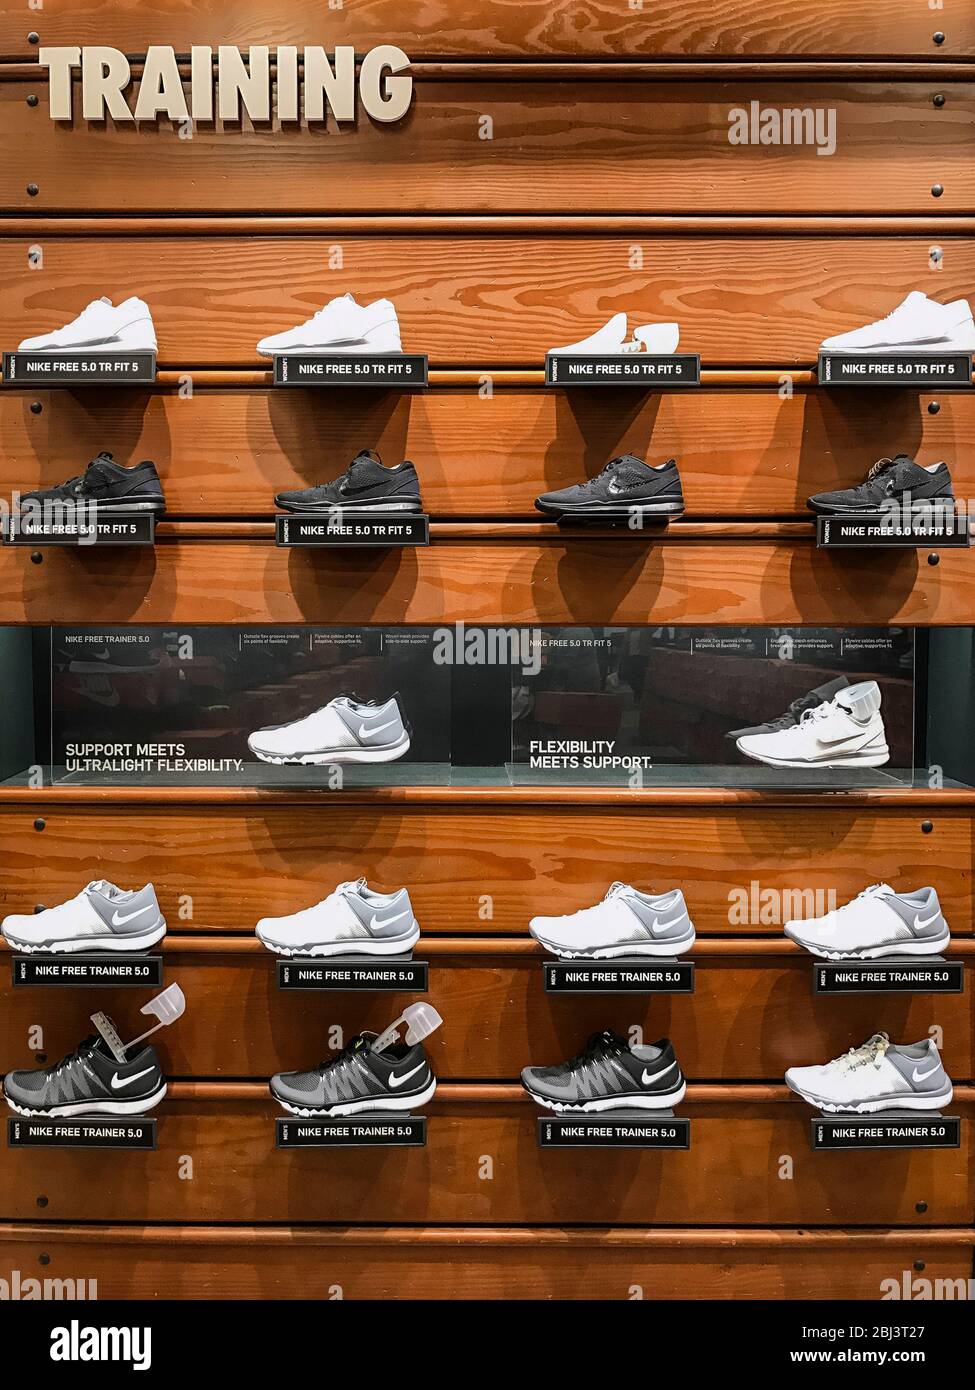 Nike training shoe display in a Nike store. Stock Photo